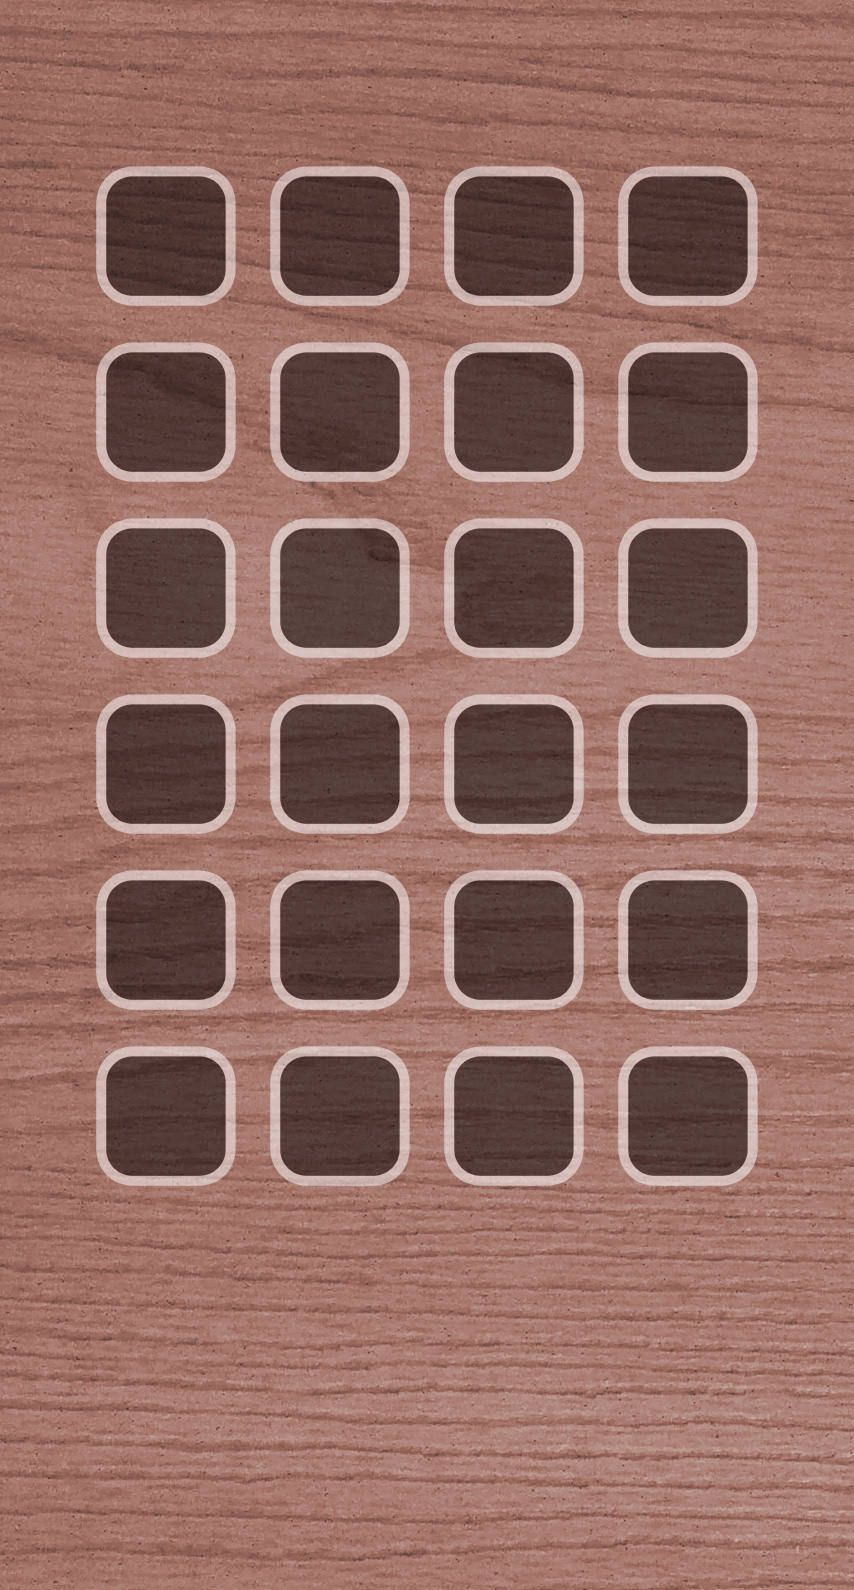 iPhone 8 Wallpaper